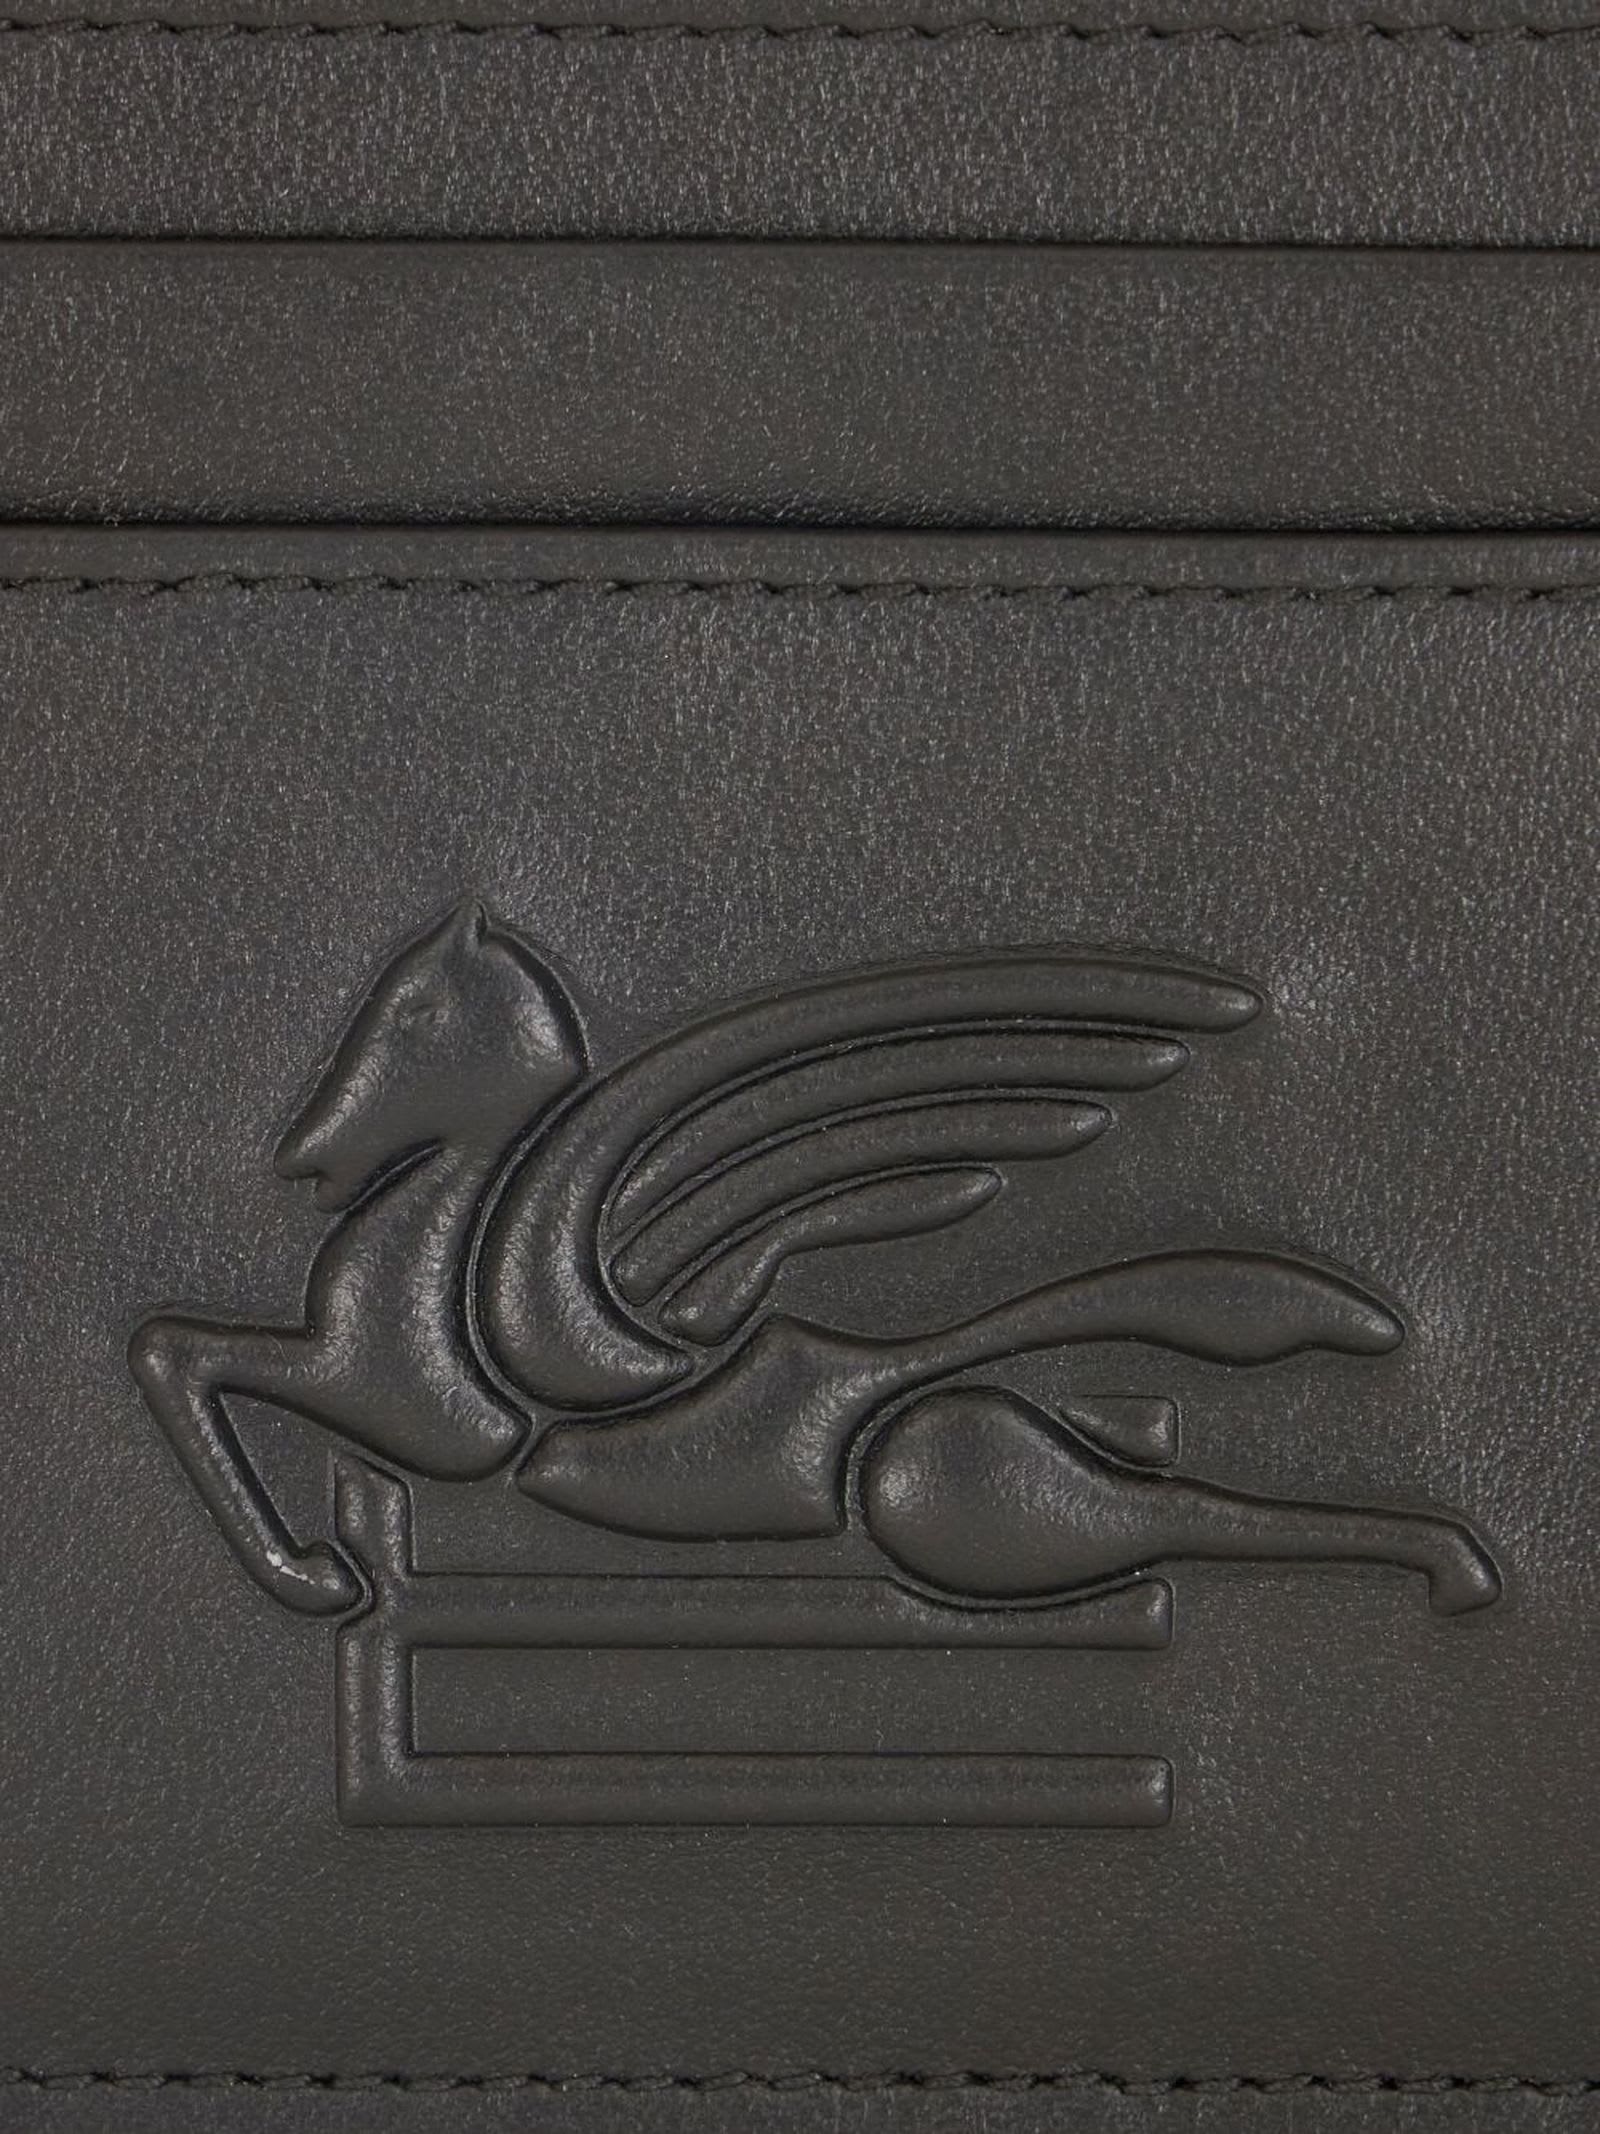 Shop Etro Black Calf Leather Cardholder In Unica